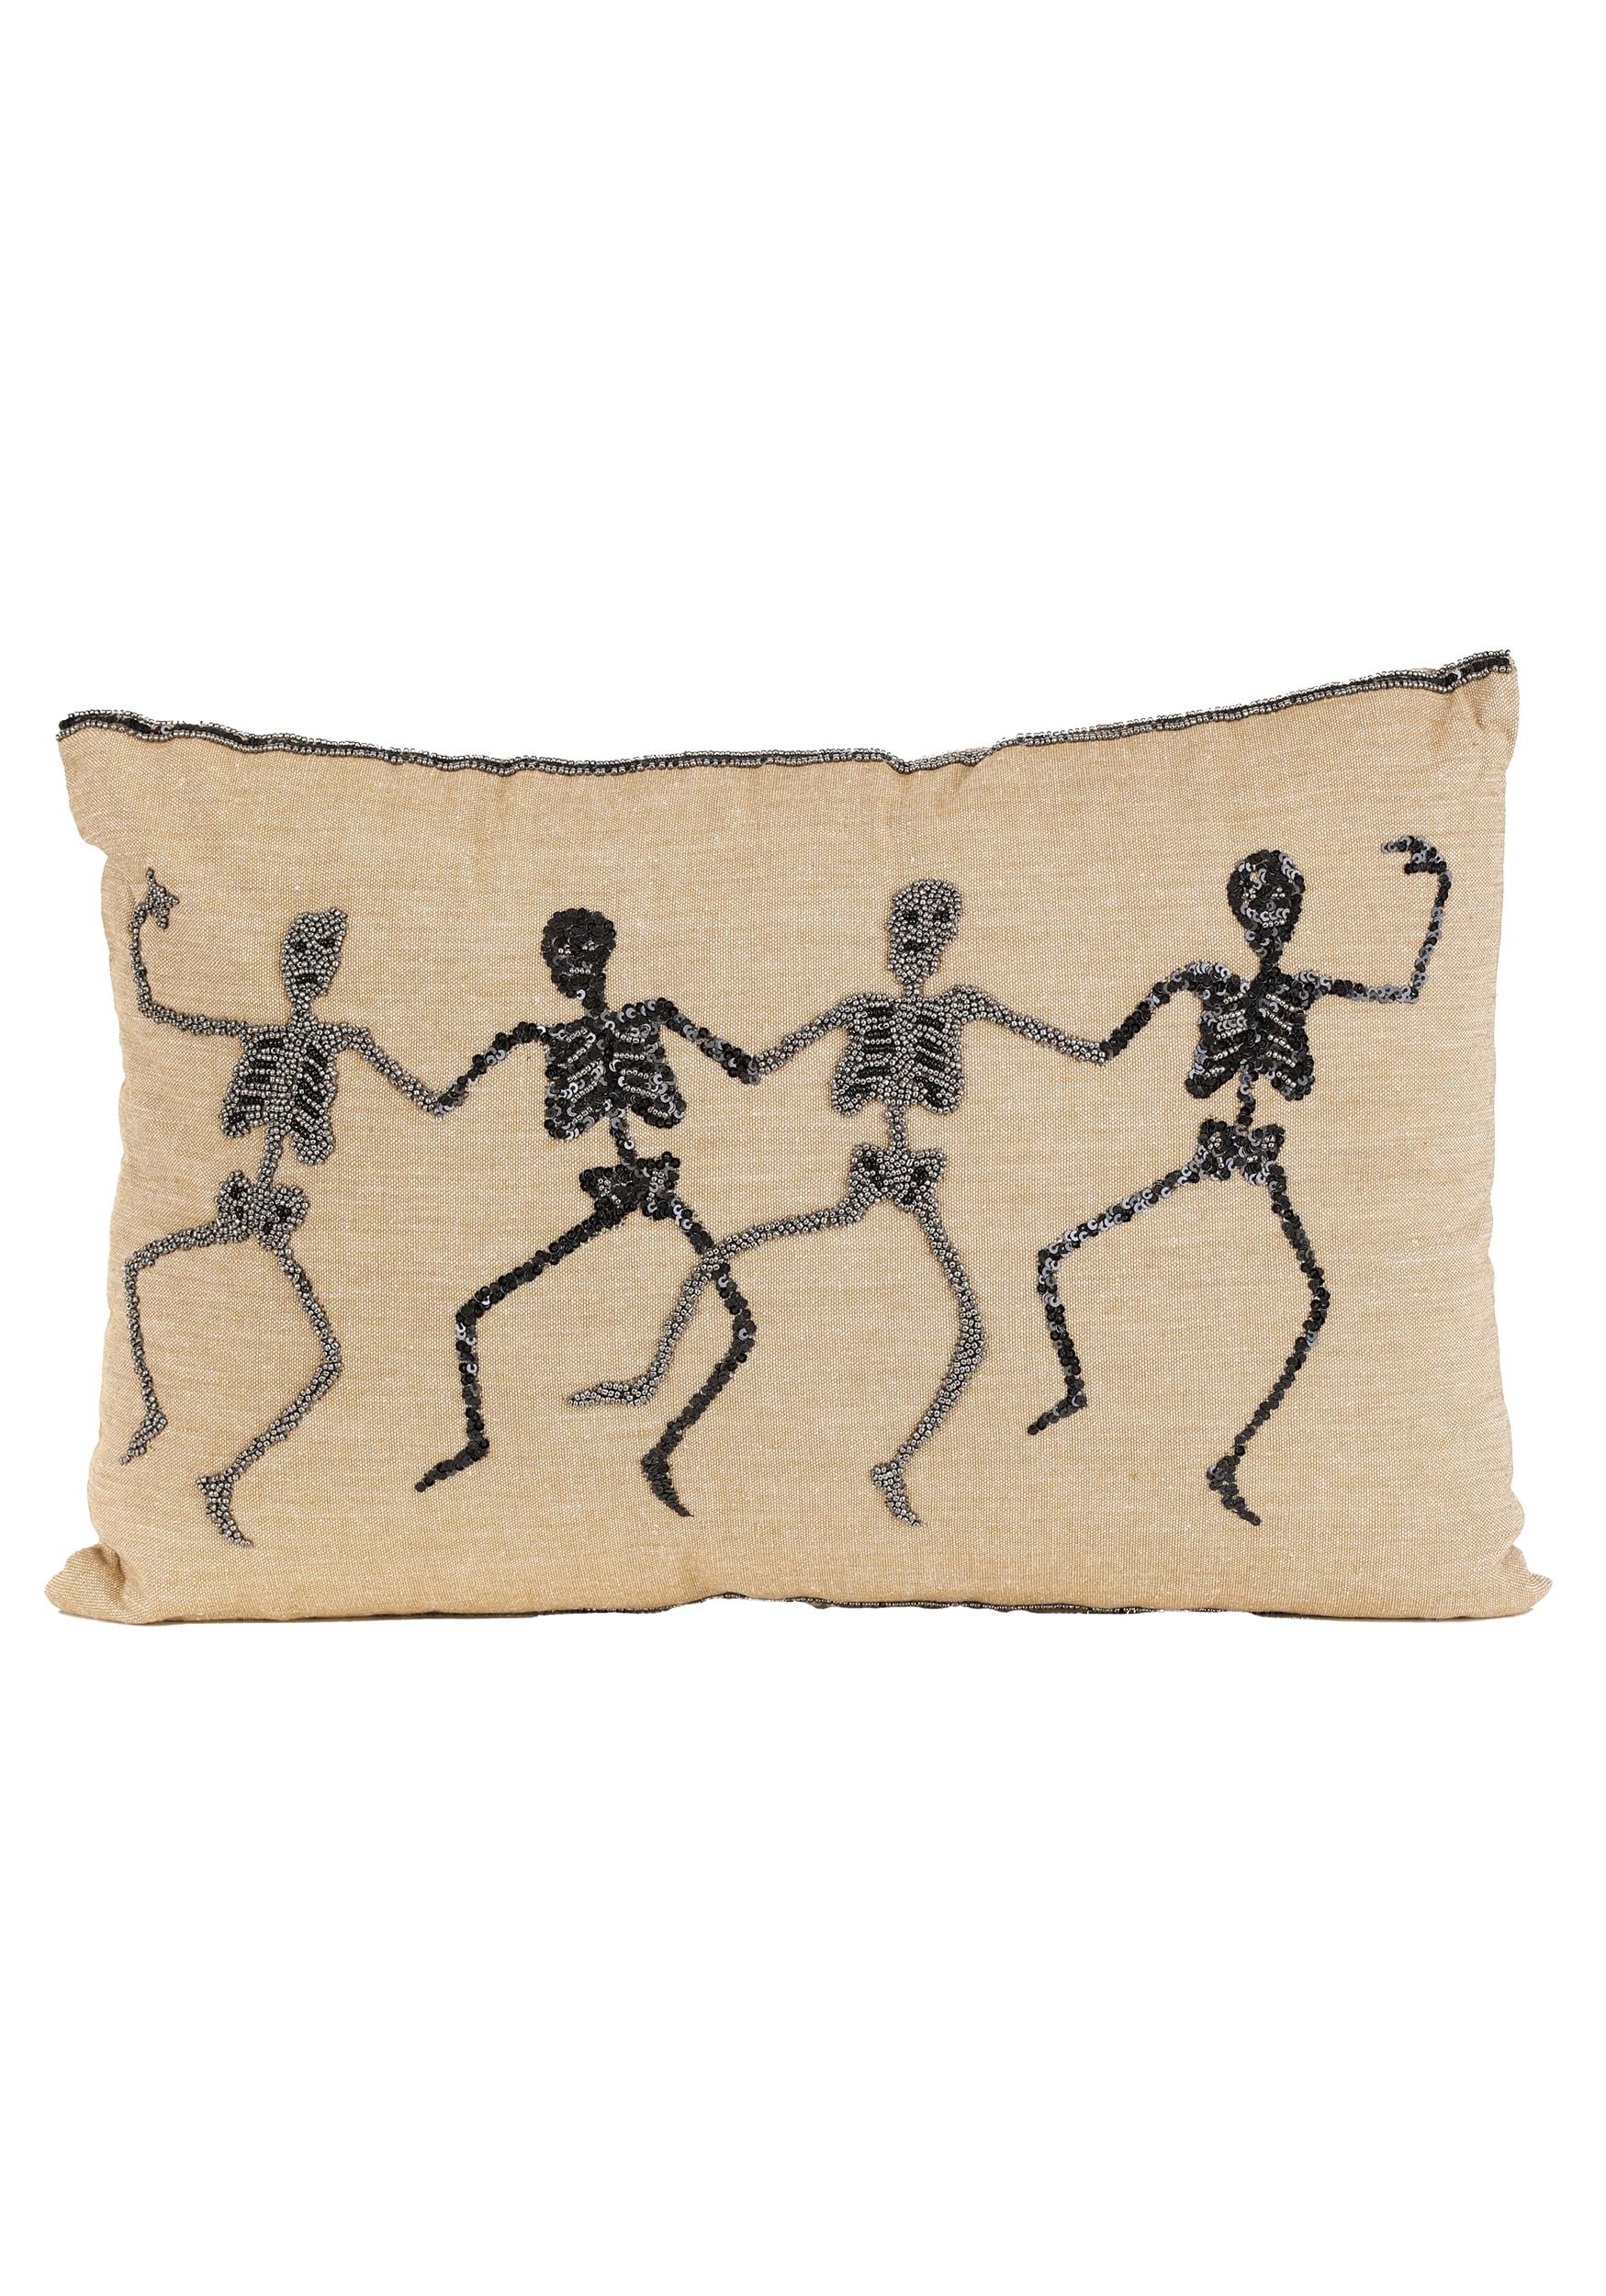 18 Tan Rectangle Decorative Halloween Pillow With Beaded Skeletons